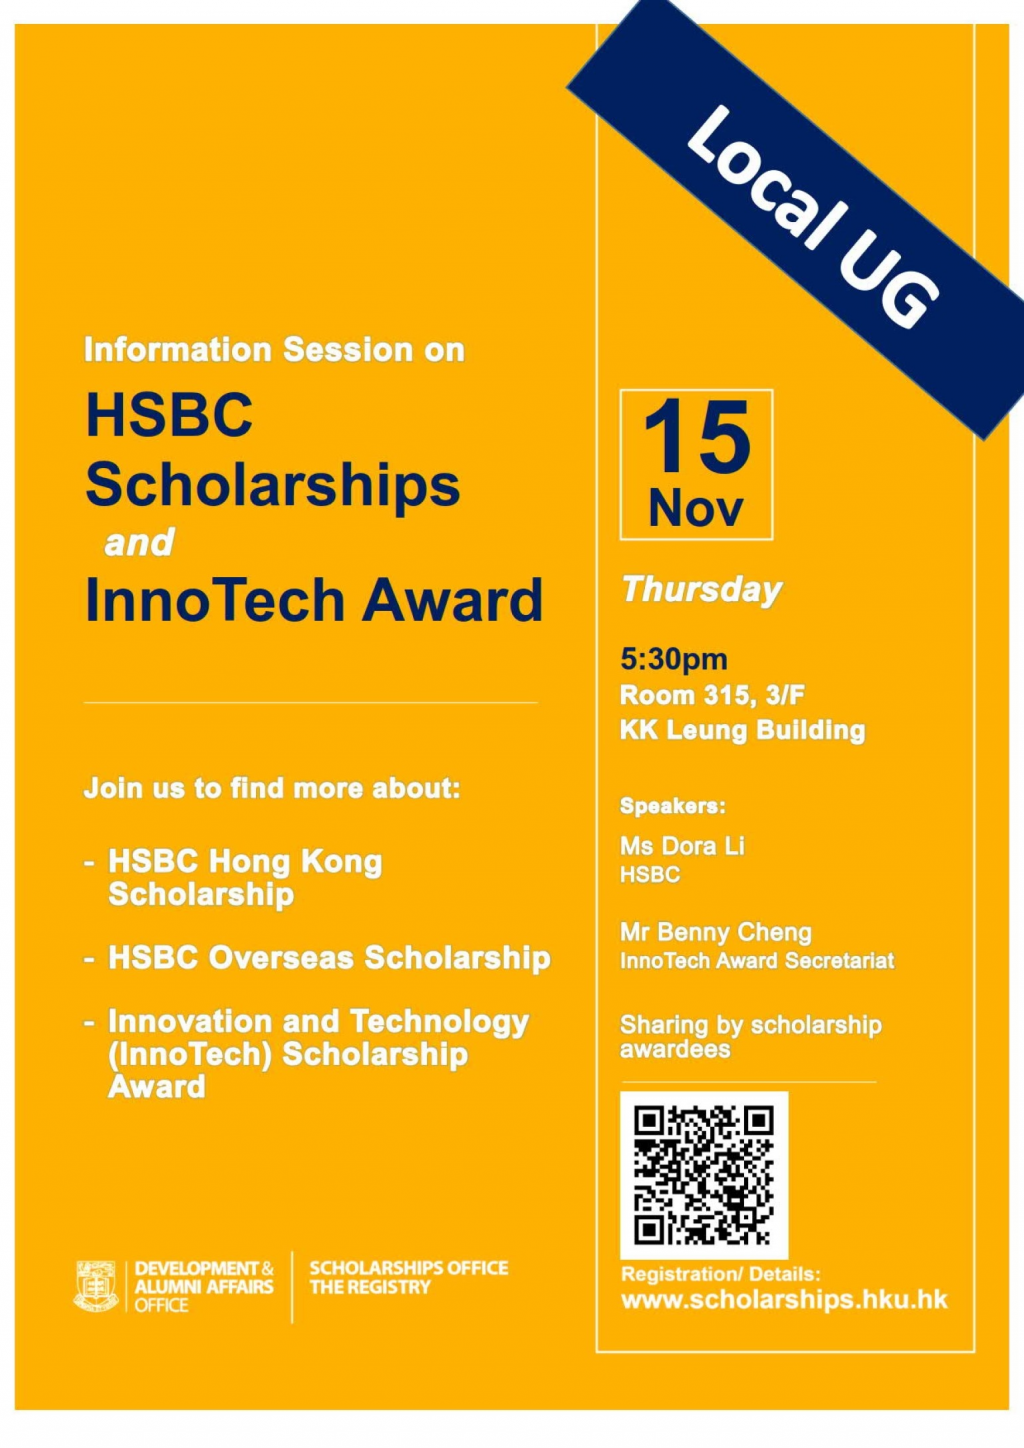 HSBC Scholarships & Innovation and Technology Scholarship Award